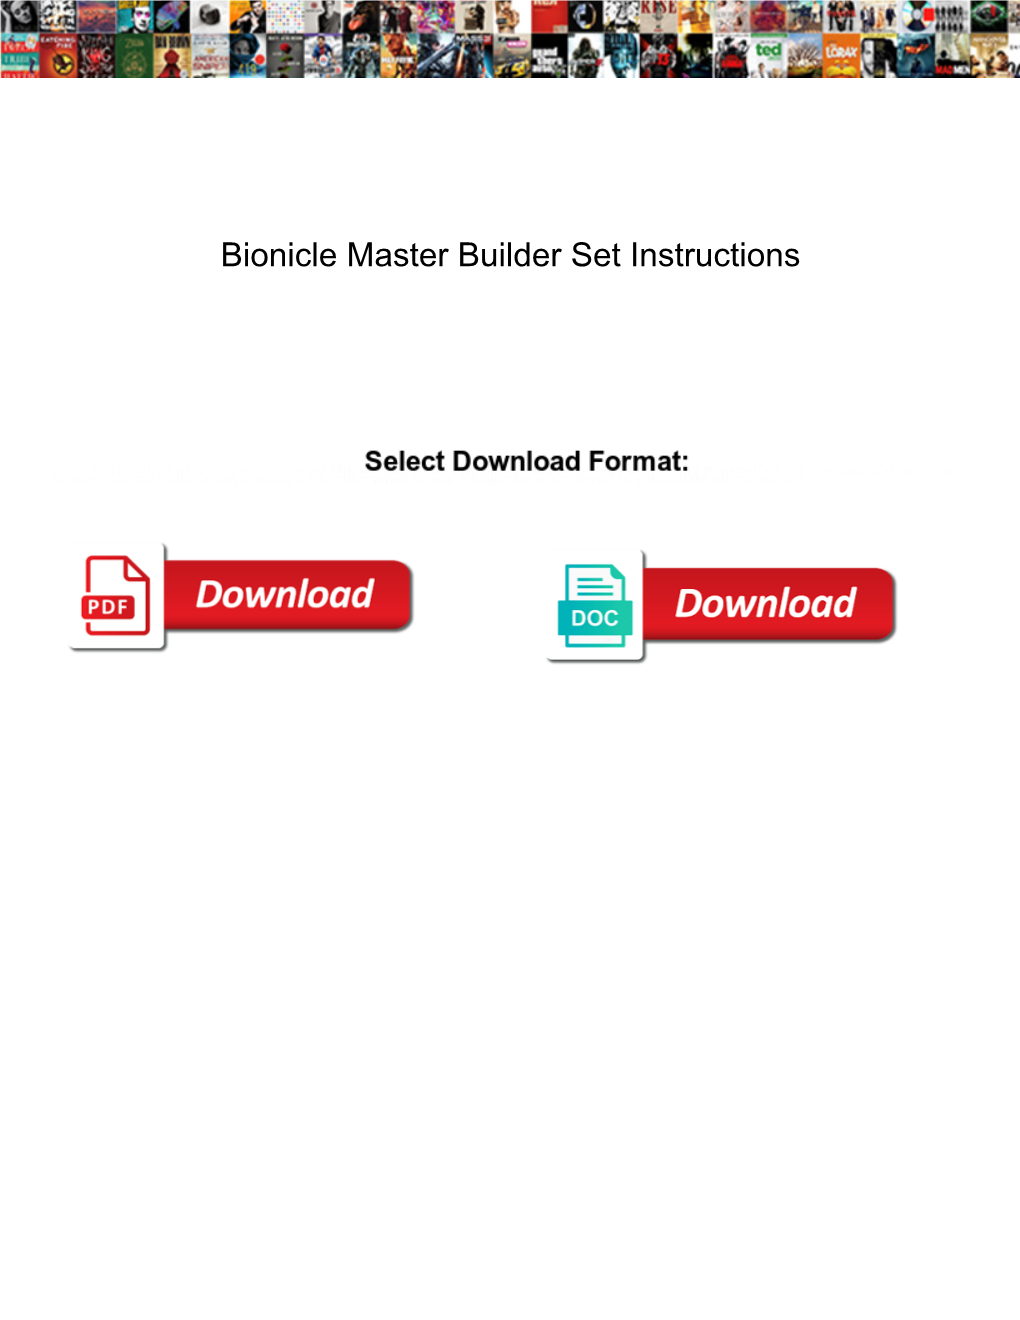 Bionicle Master Builder Set Instructions